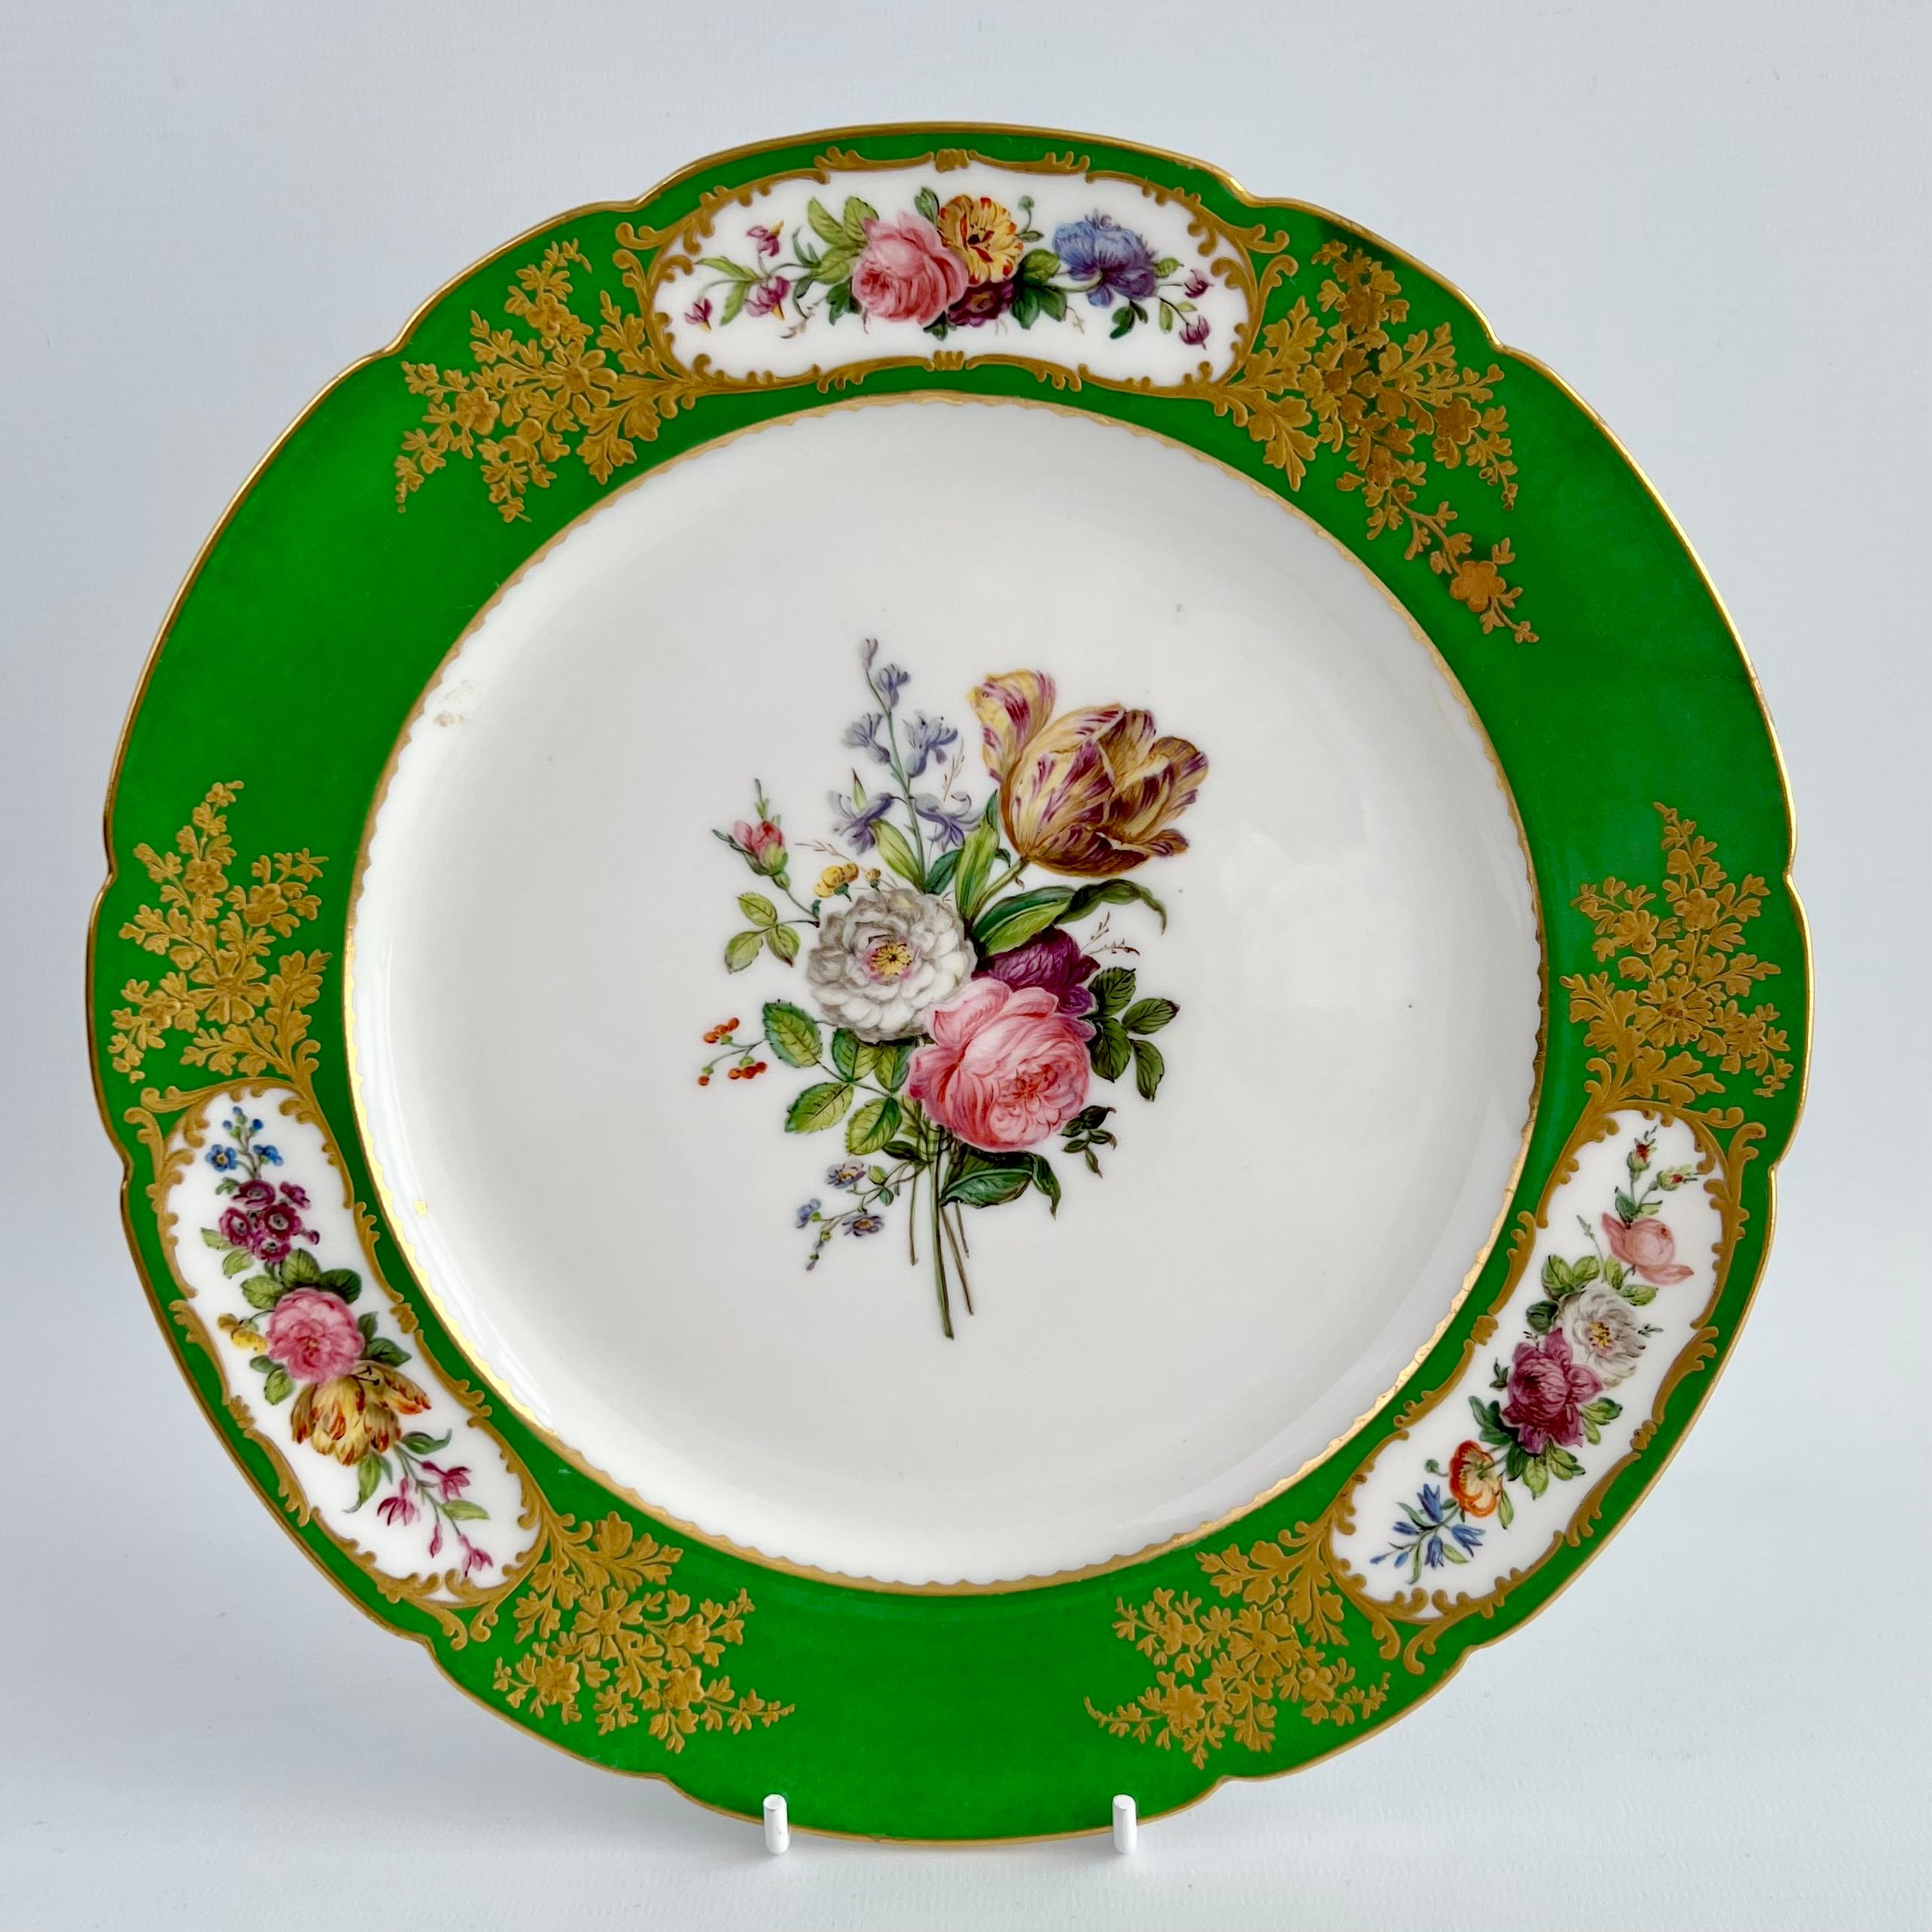 Porcelain Vieux Paris Feuillet Set of 6 Plates, French Green, Gilt and Flowers, 1817-1834